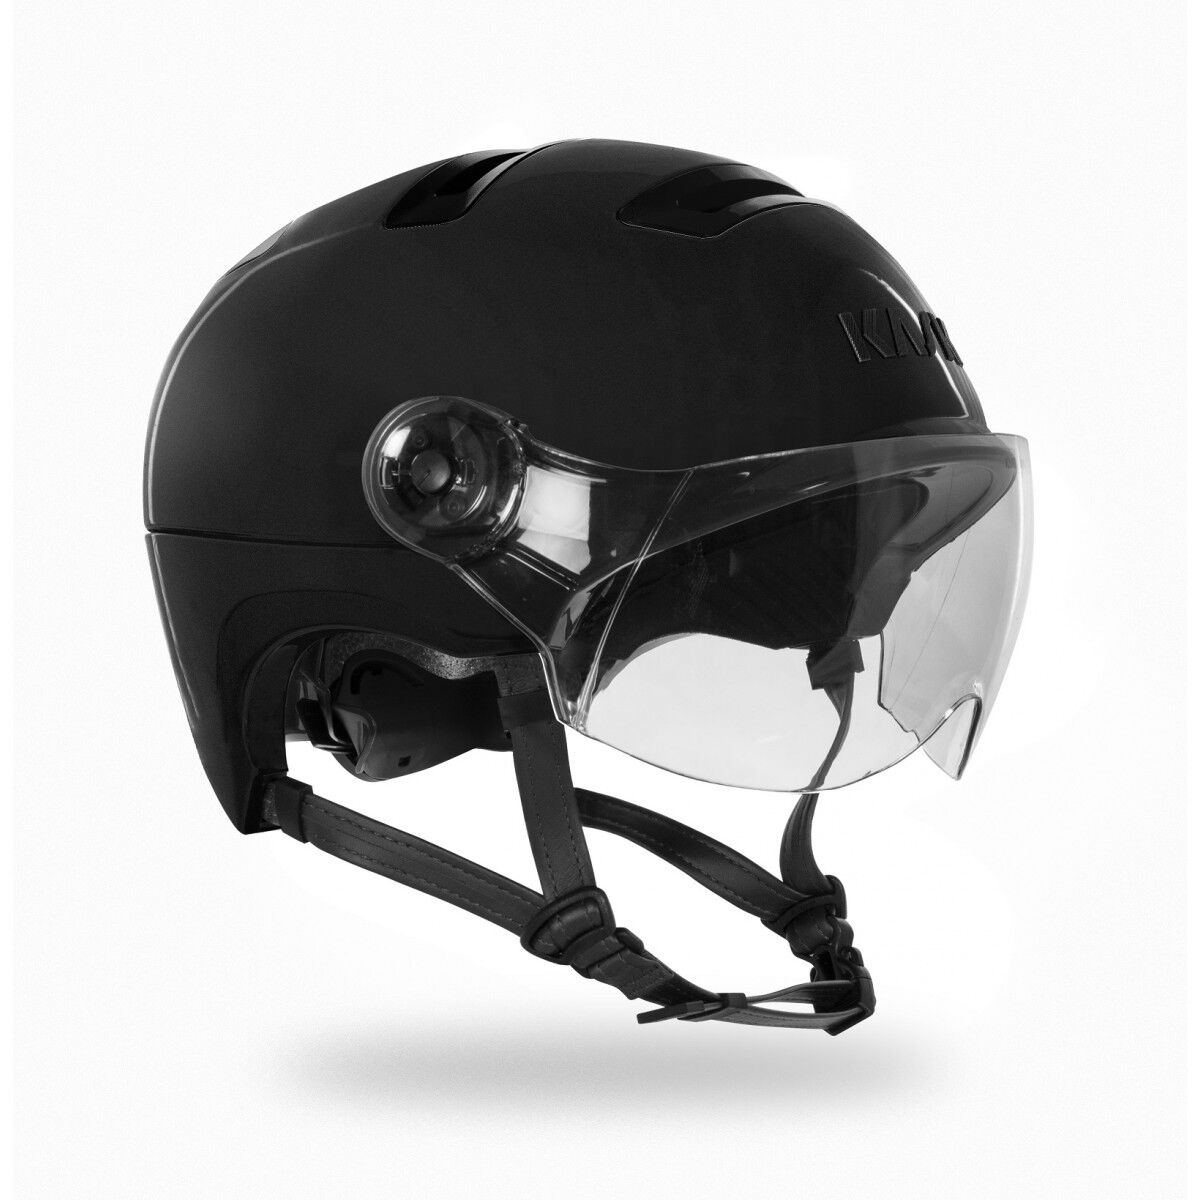 KASK Urban R WG11 - Cycling helmet